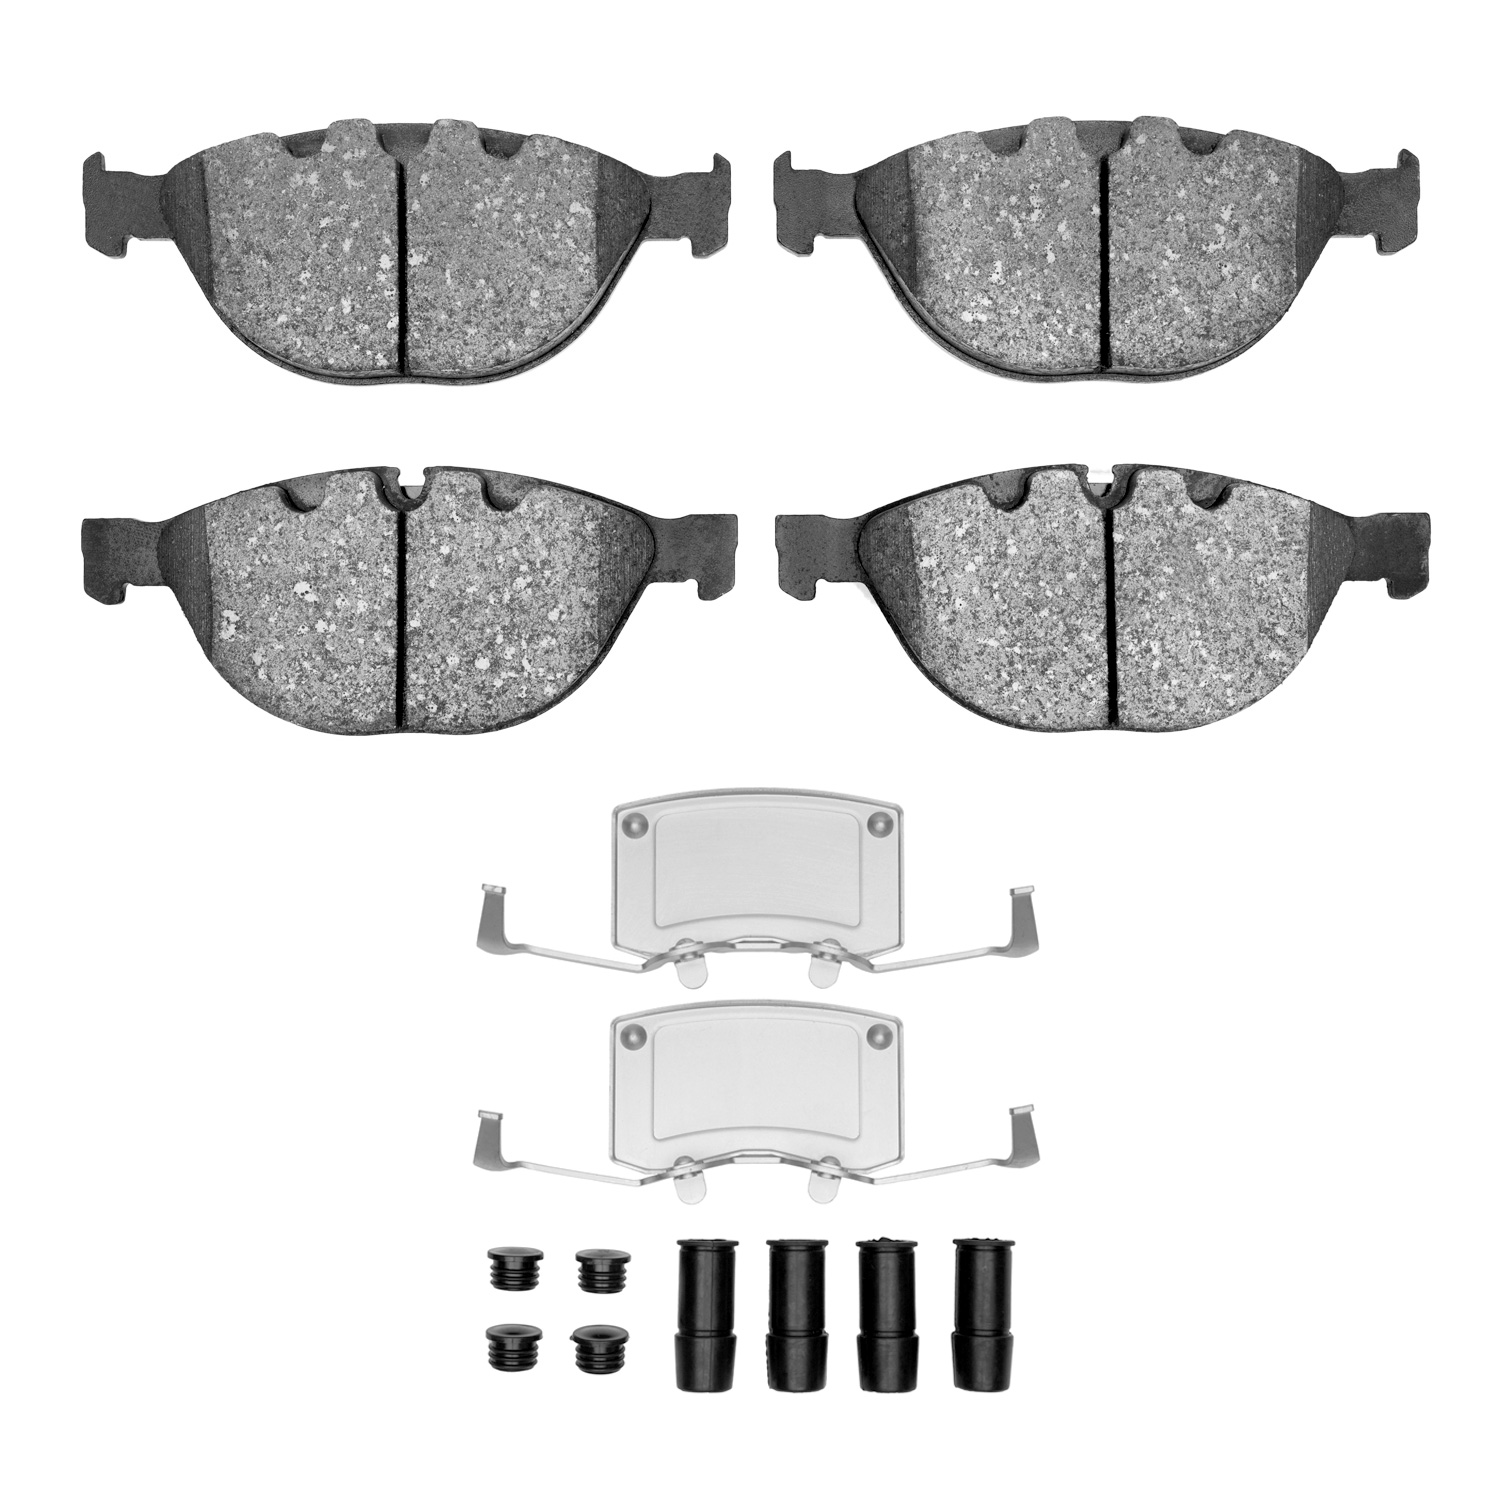 Semi-Metallic Brake Pads & Hardware Kit, 2004-2012 Fits Multiple Makes/Models, Position: Front